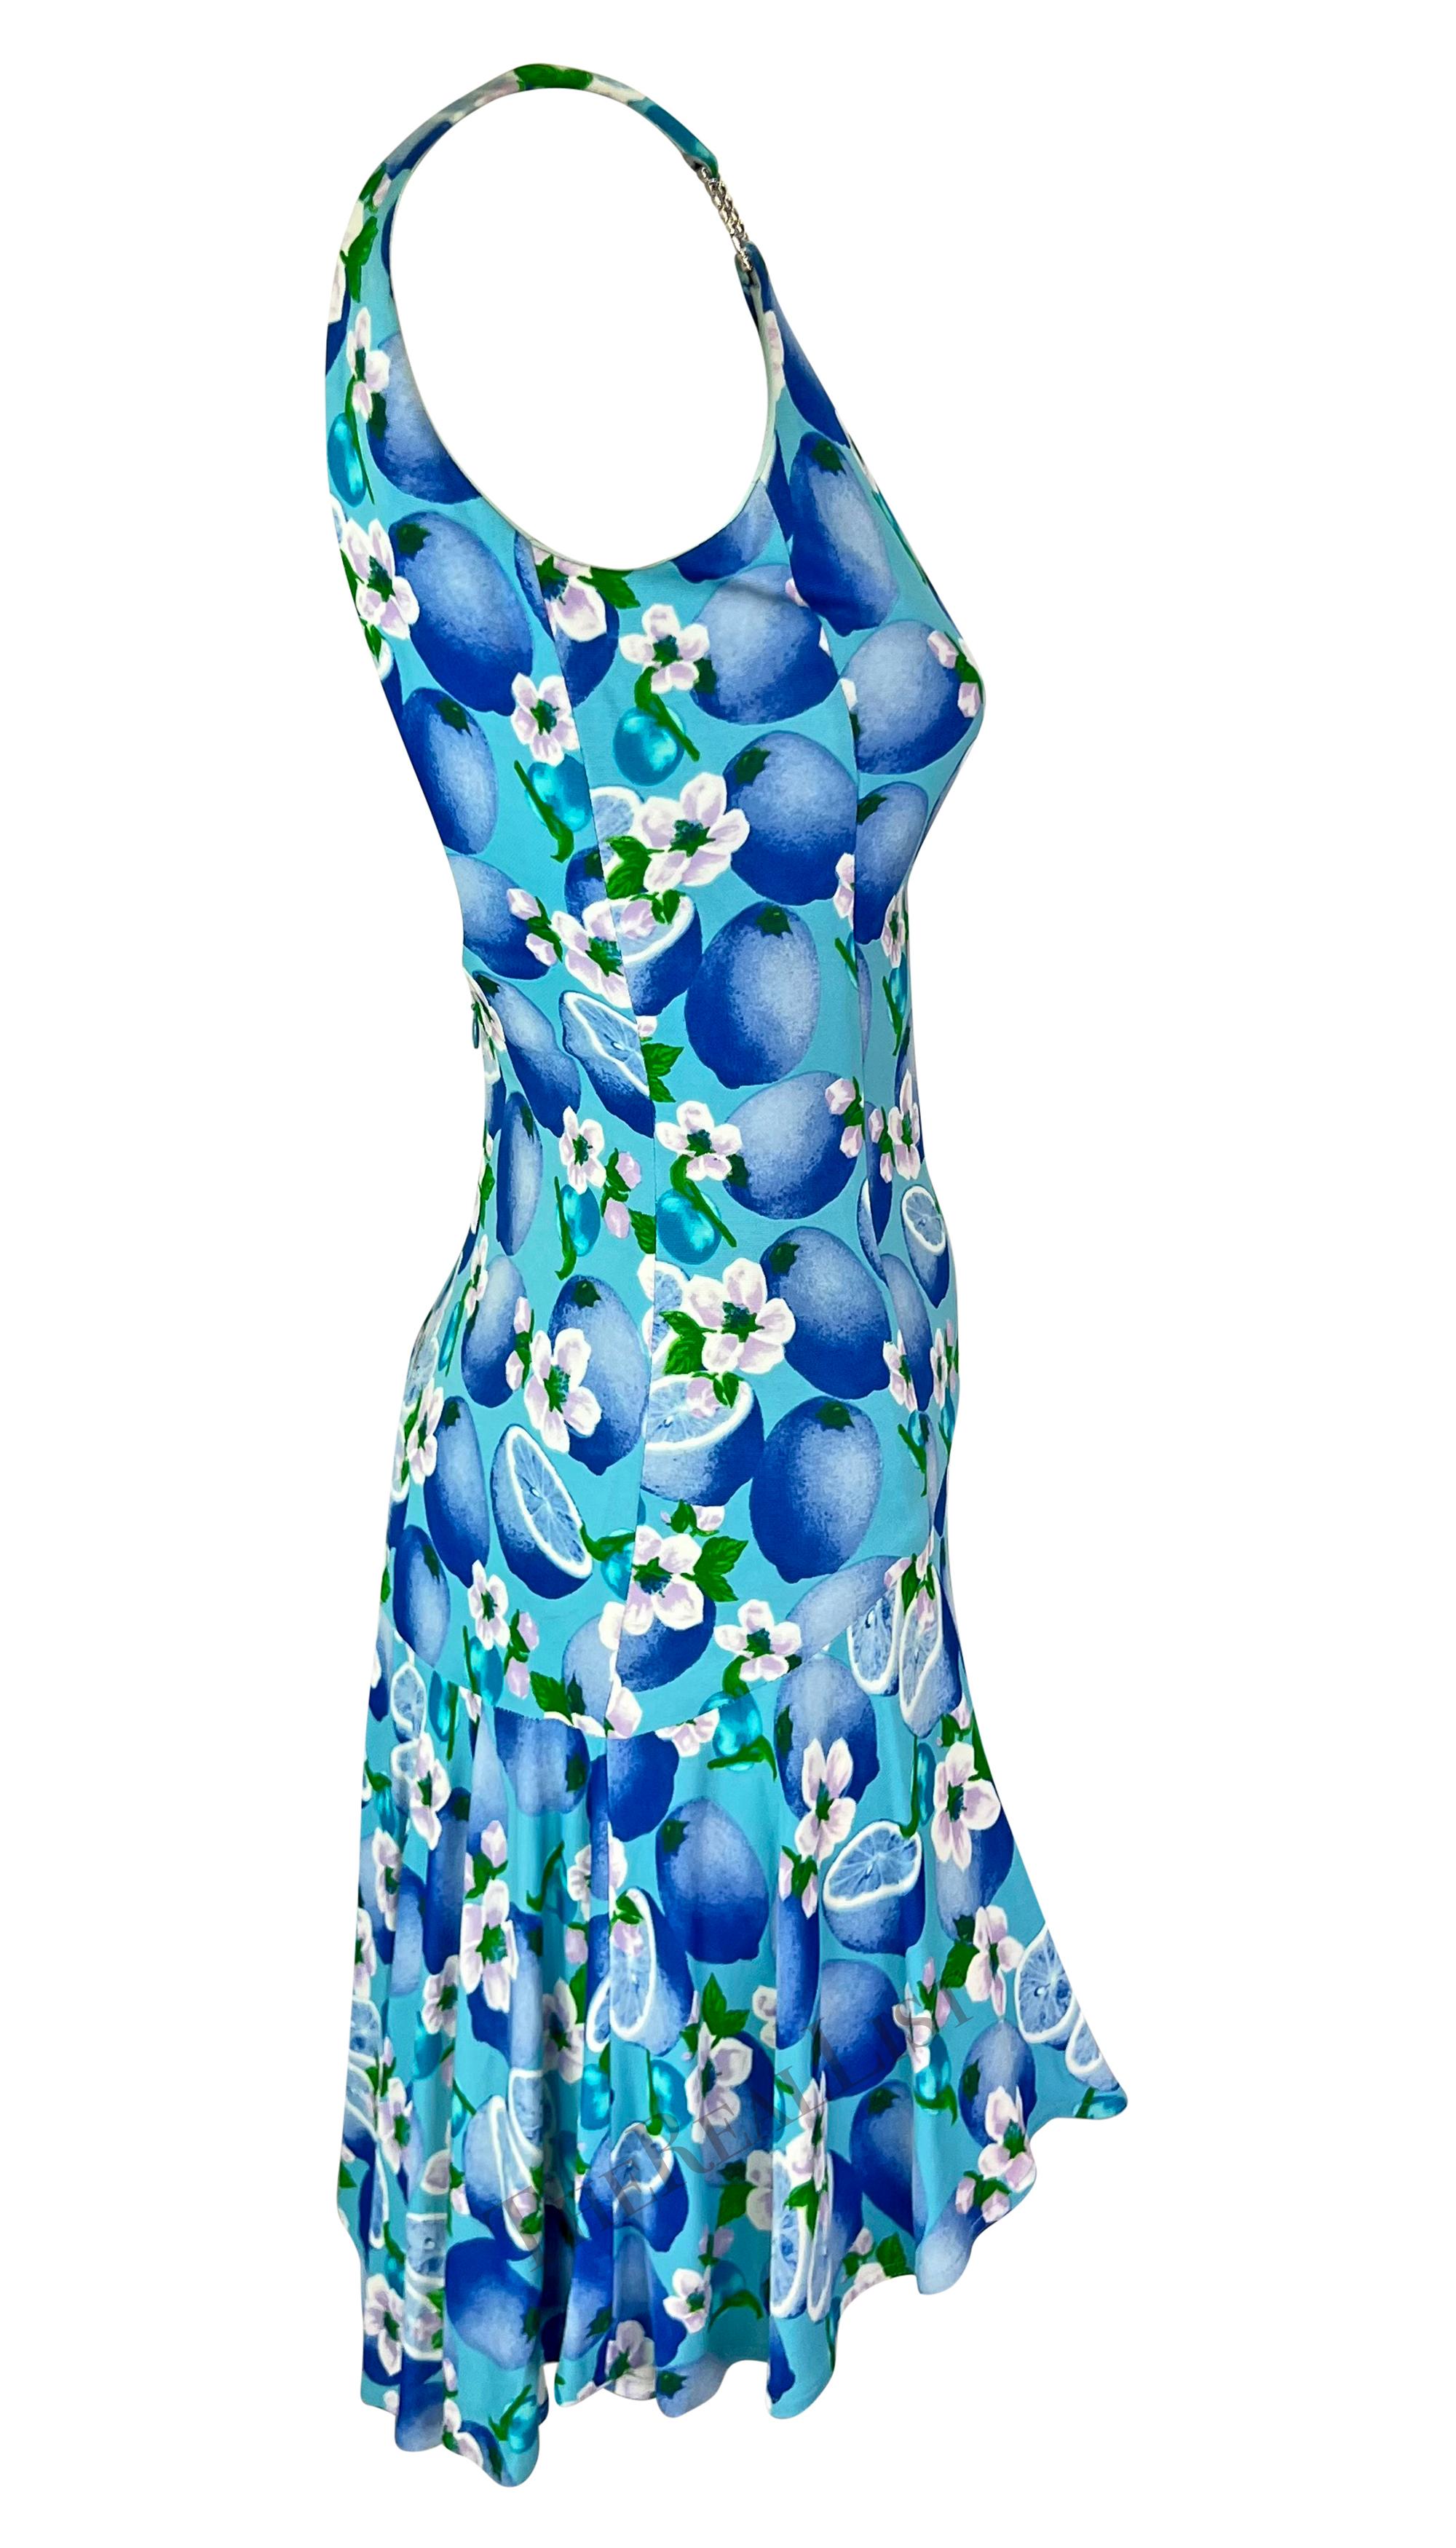 S/S 1995 Gianni Versace Light Blue Cirtus Print Mini Dress For Sale 3